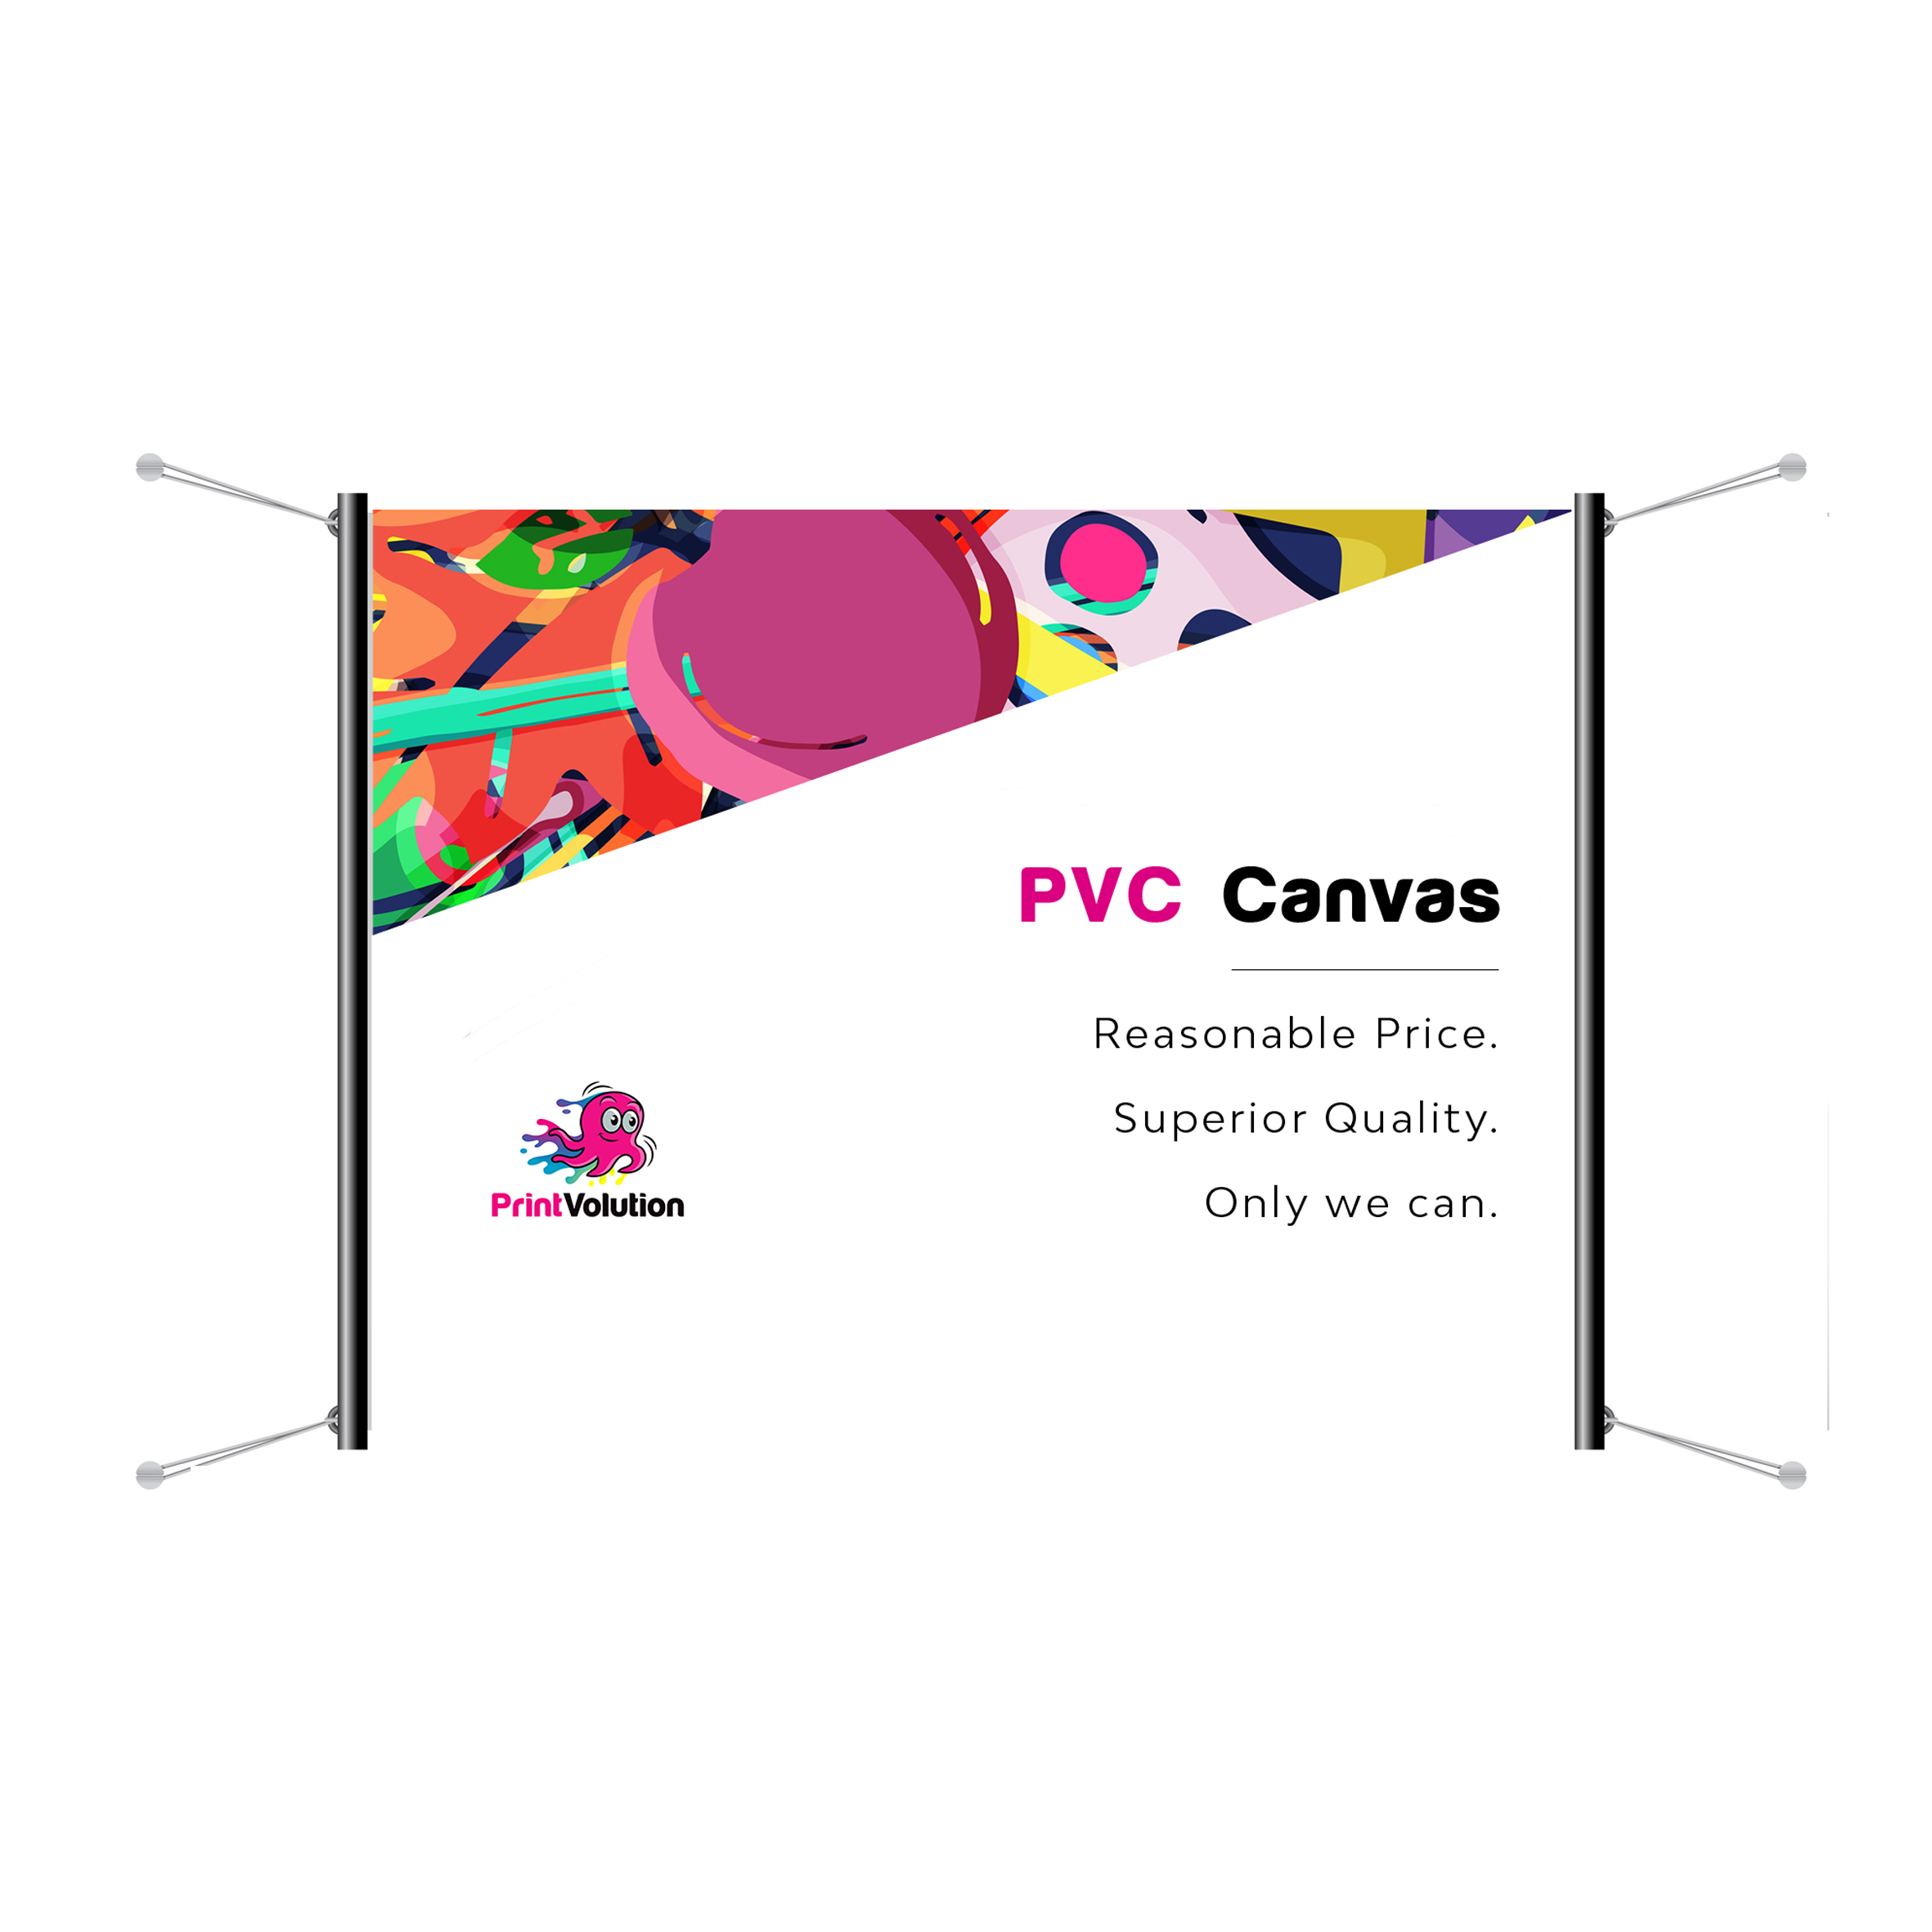 PVC Canvas